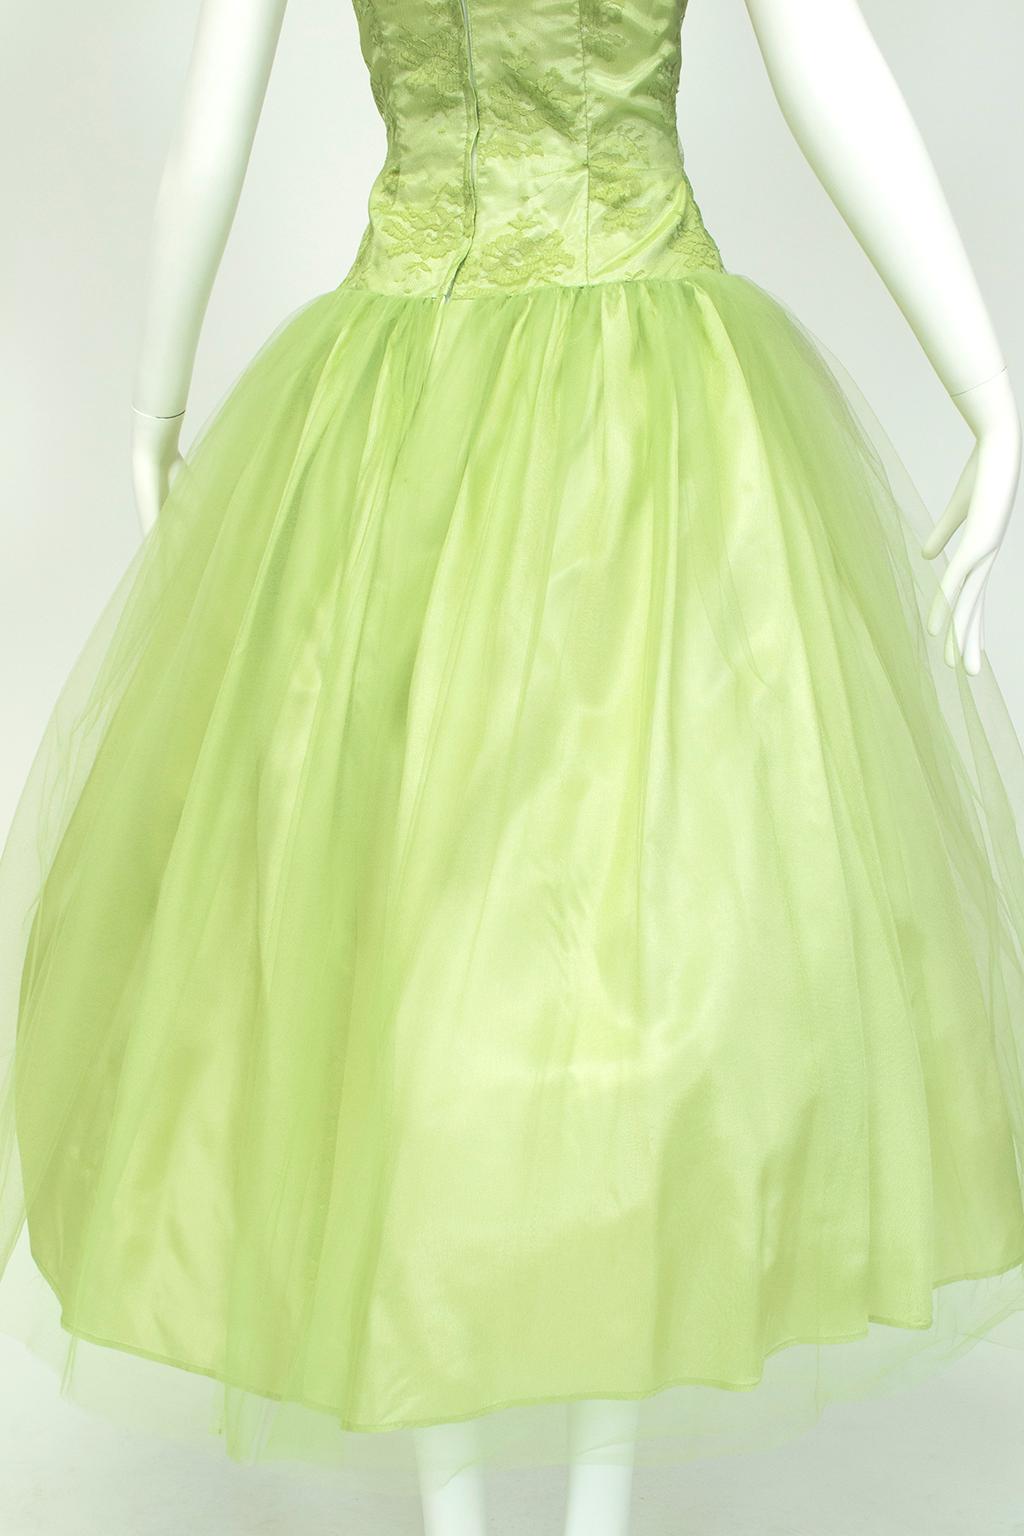 Jessica McClintock for Gunne Sax Strapless Lime Ballerina Dress – Small, 2003 For Sale 1